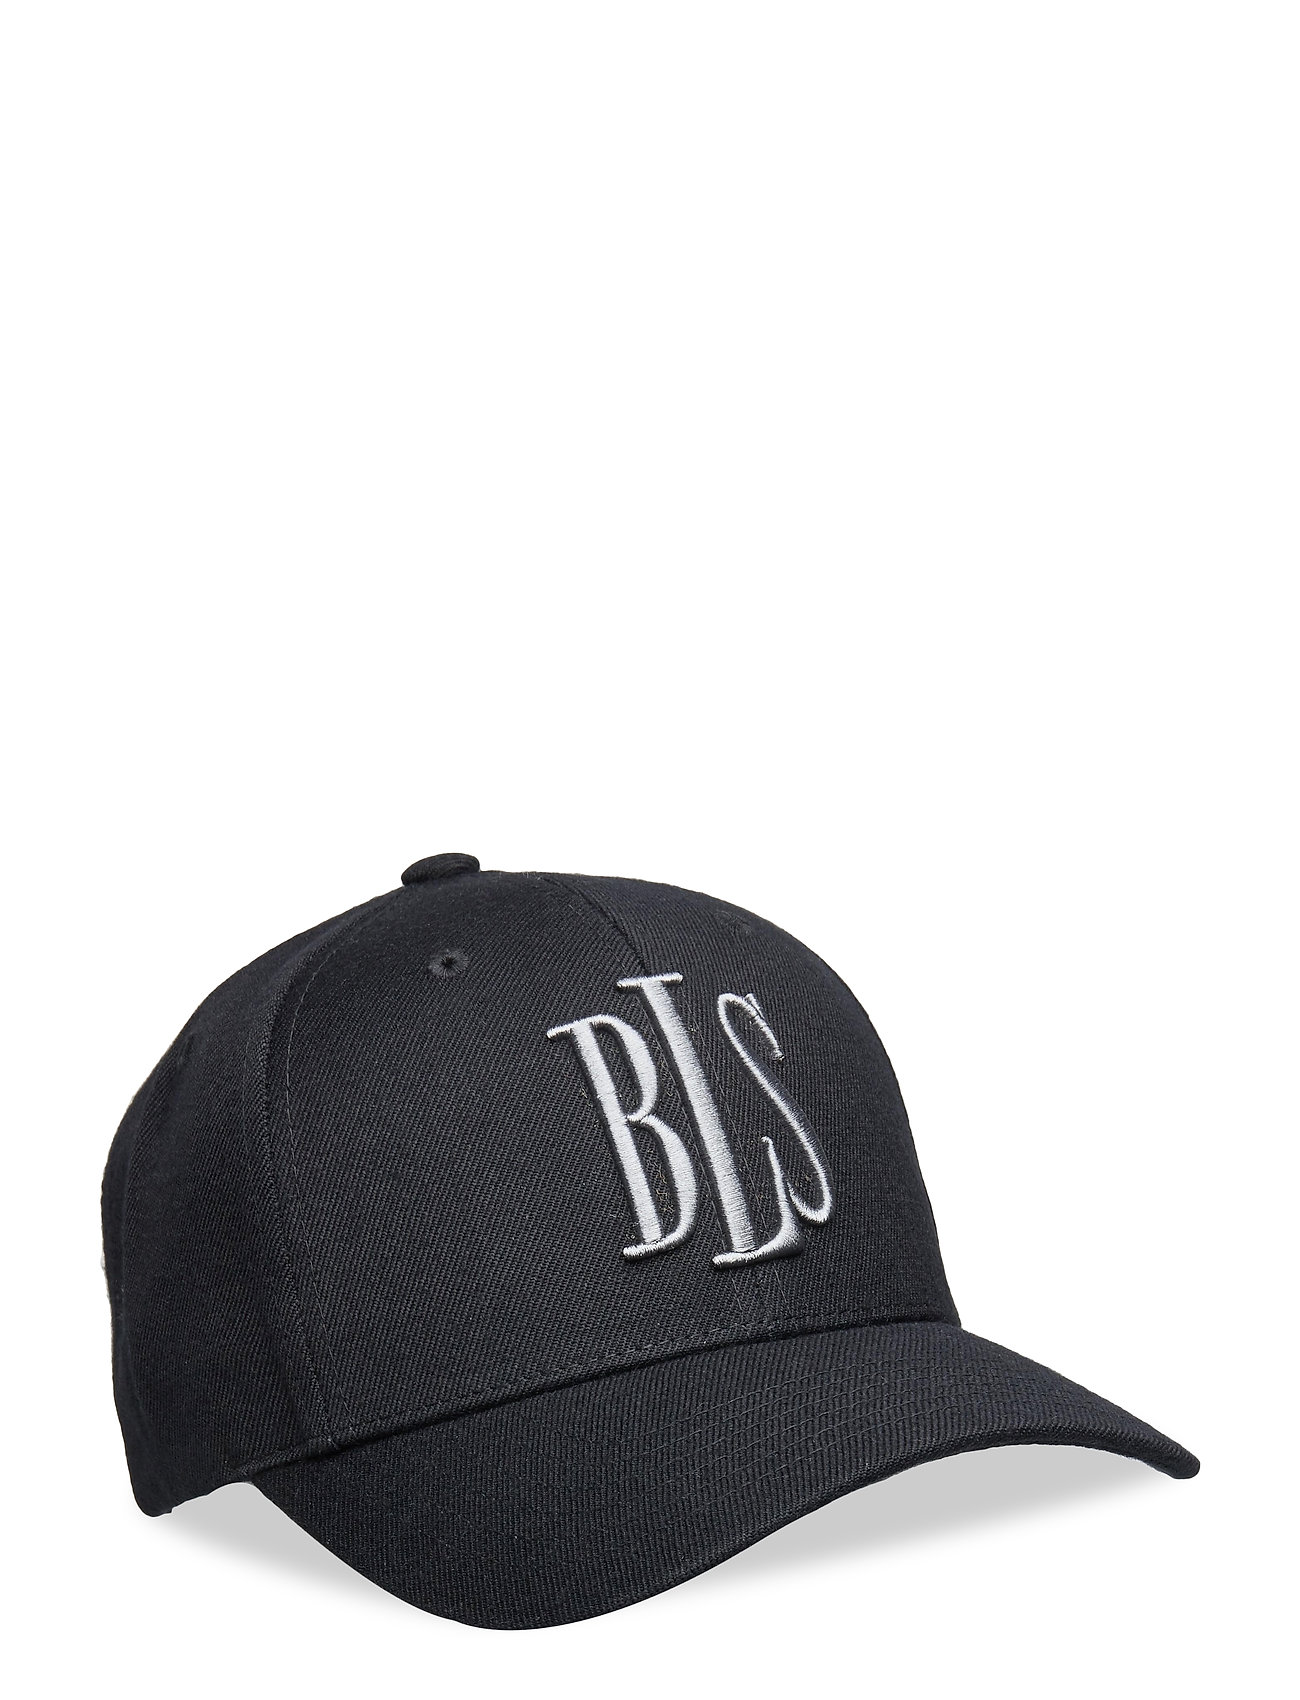 Classic Baseball Cap Accessories Headwear Caps Sort BLS Hafnia